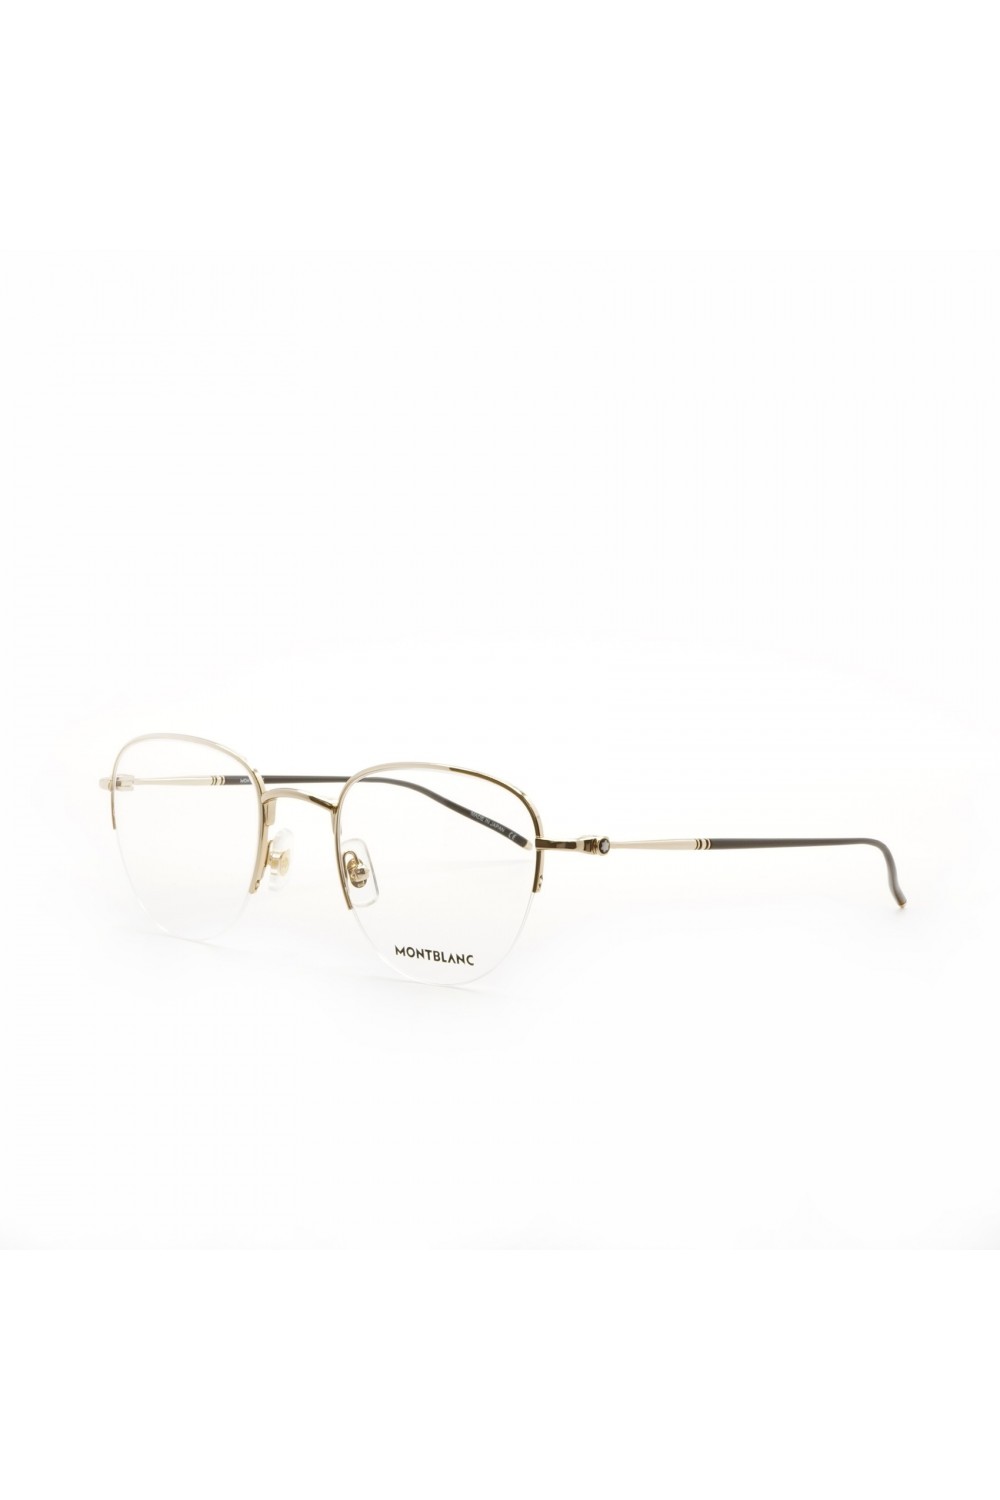 Montblanc - Occhiali da vista in titanio tondi per uomo oro - MB0129 004